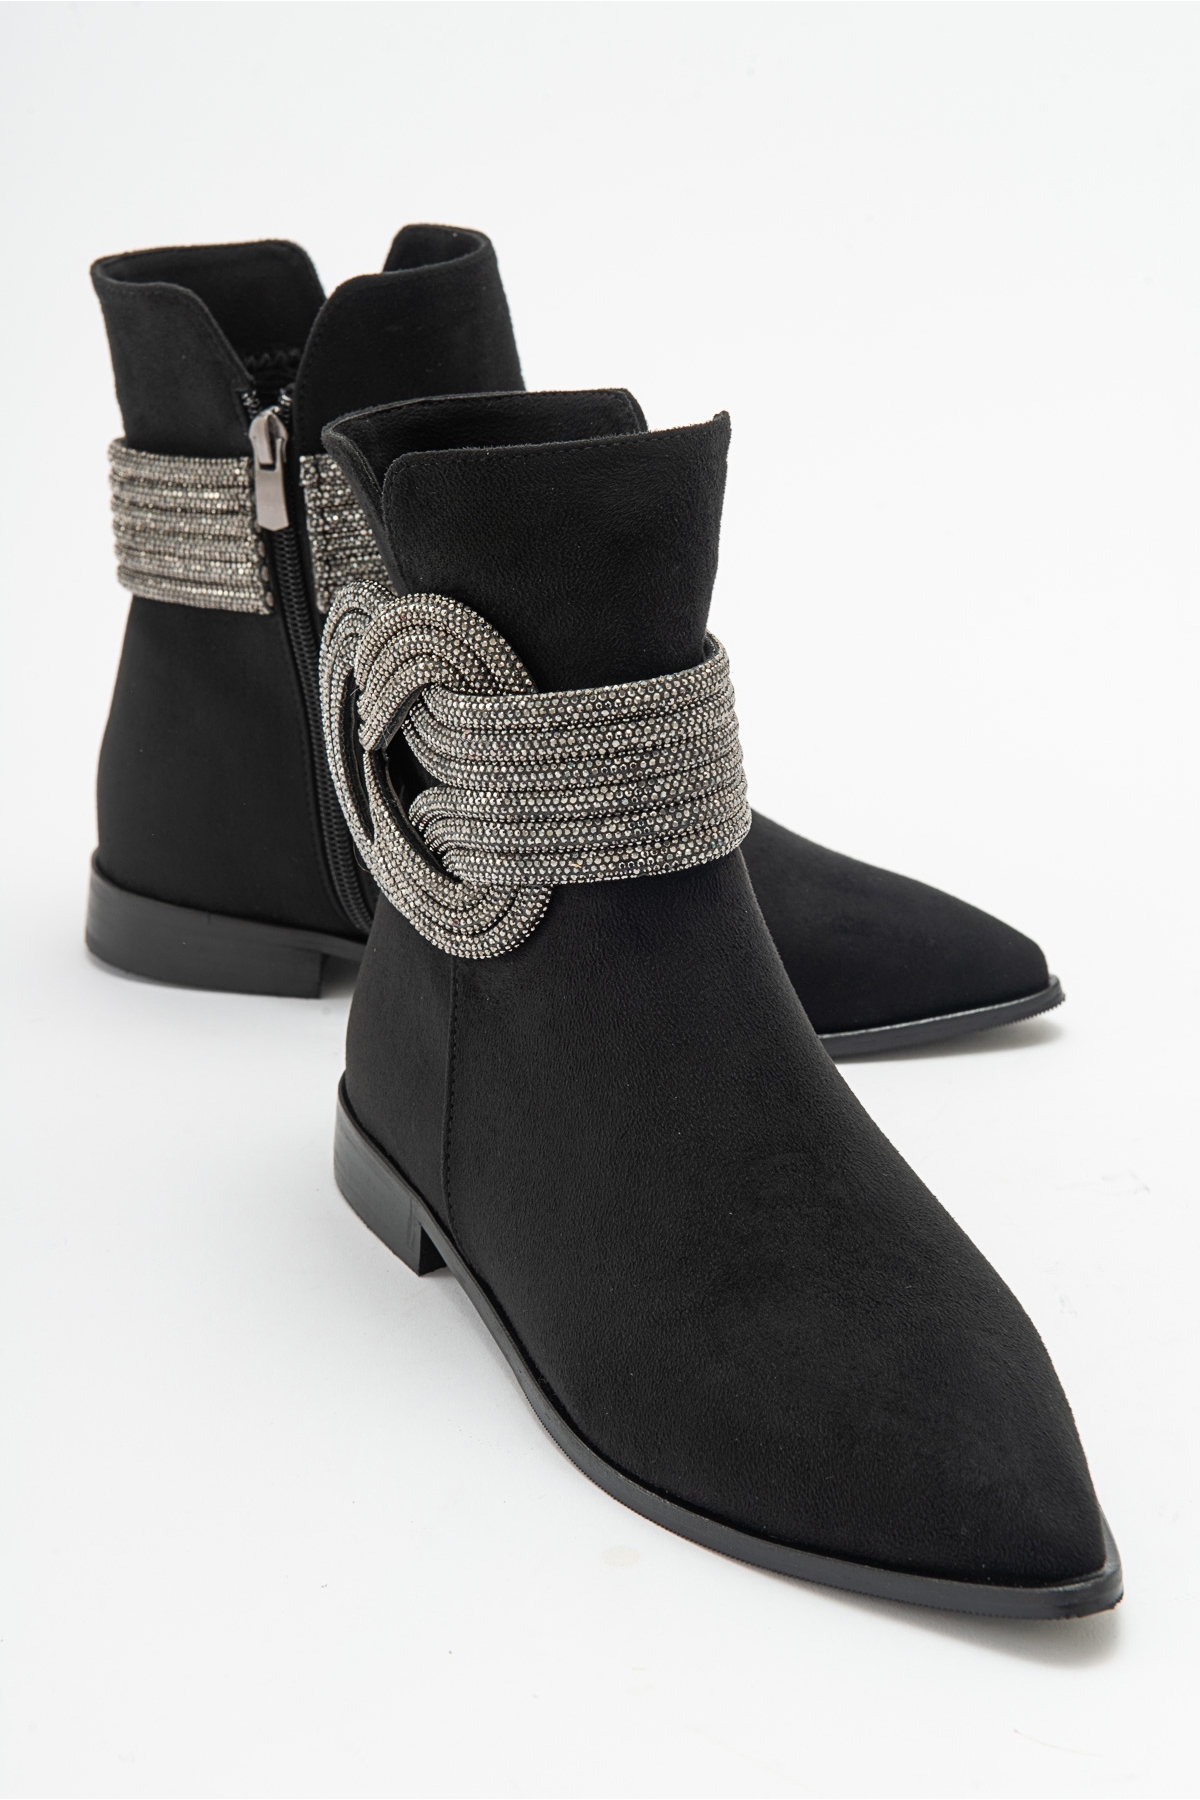 LuviShoes UNDO Women's Black Suede Stone Boots